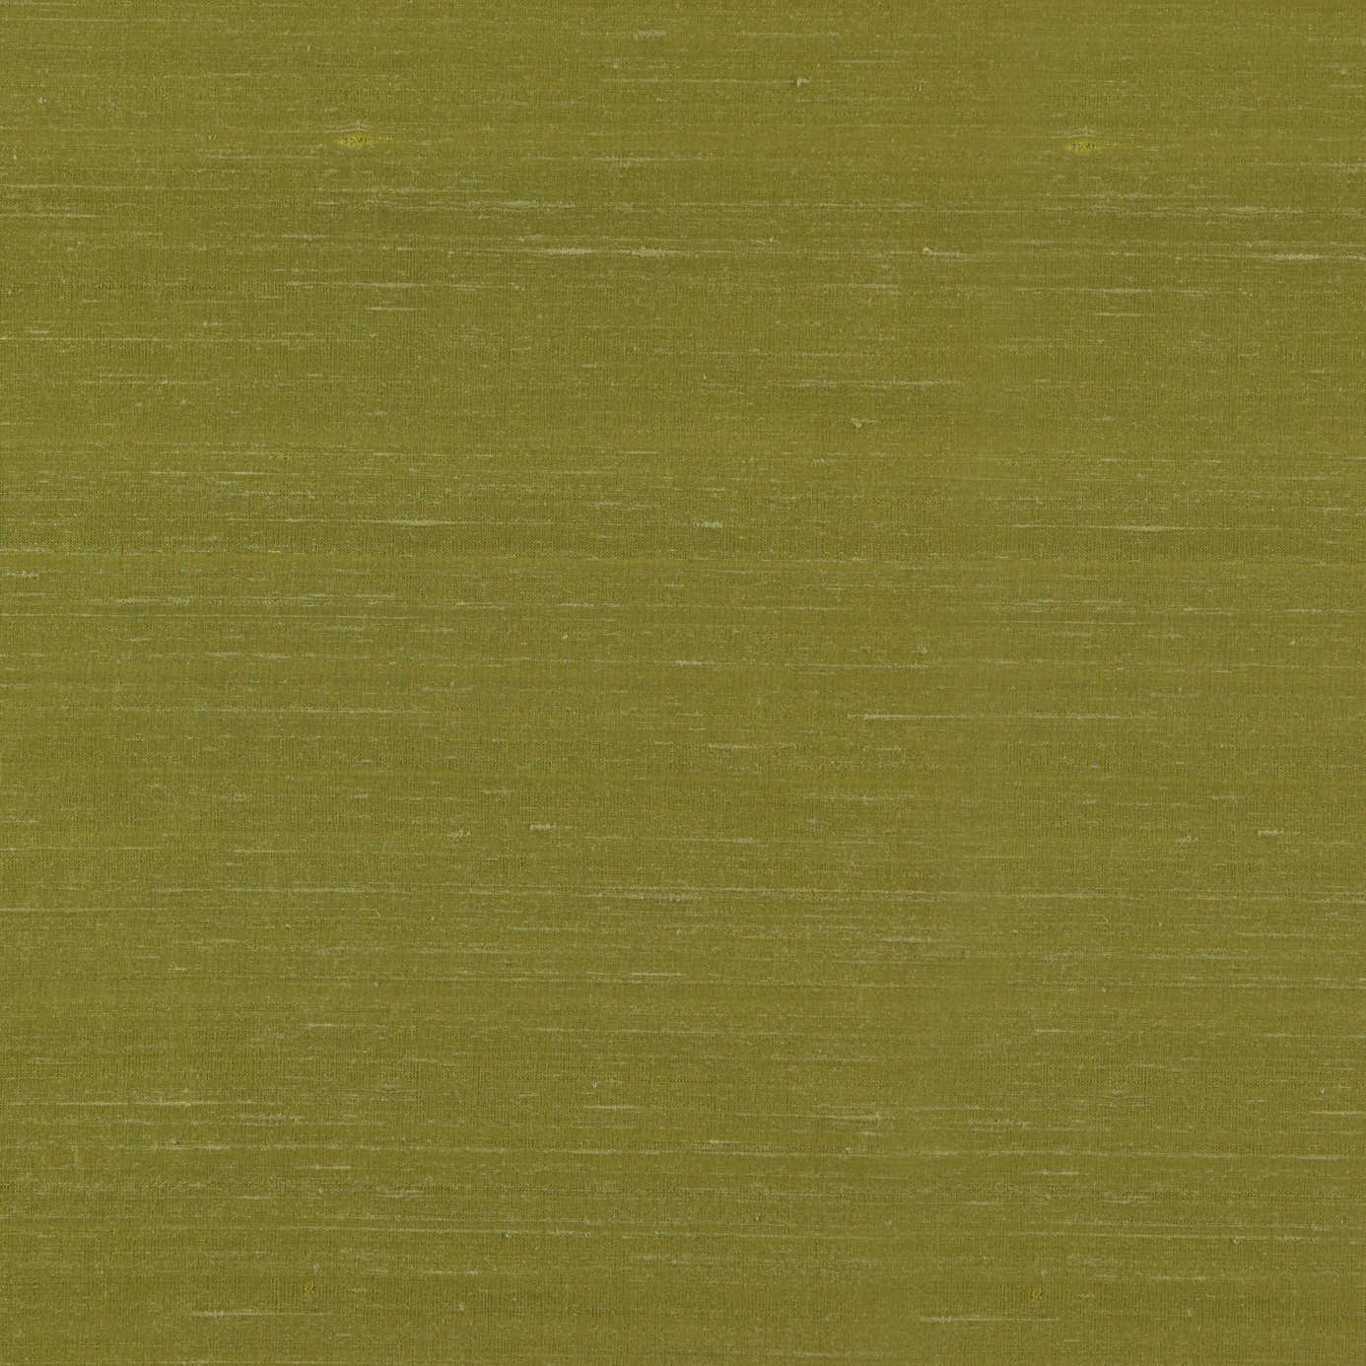 Lilaea Silks Kiwi Fabric by HAR